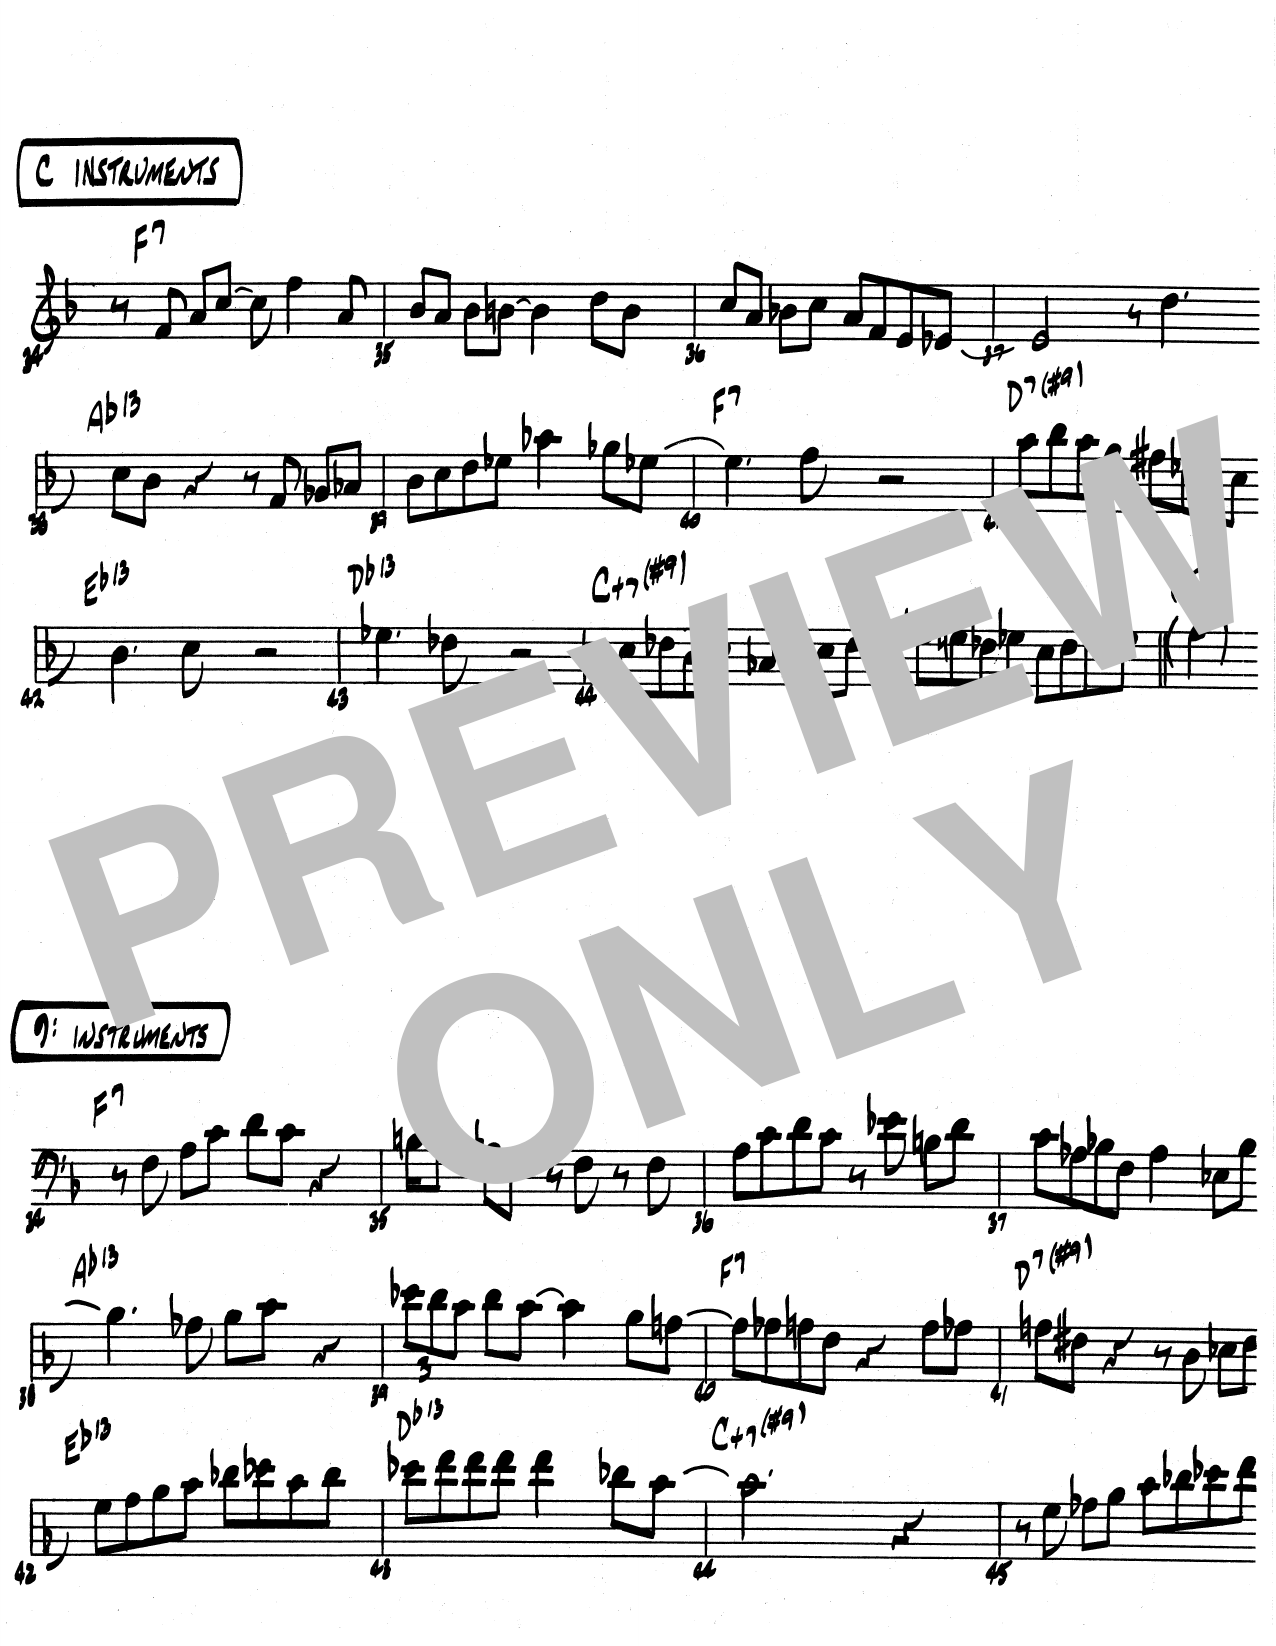 Download Steve Wiest Ceiling Dogs - Solo Sheet - Trumpet Sheet Music